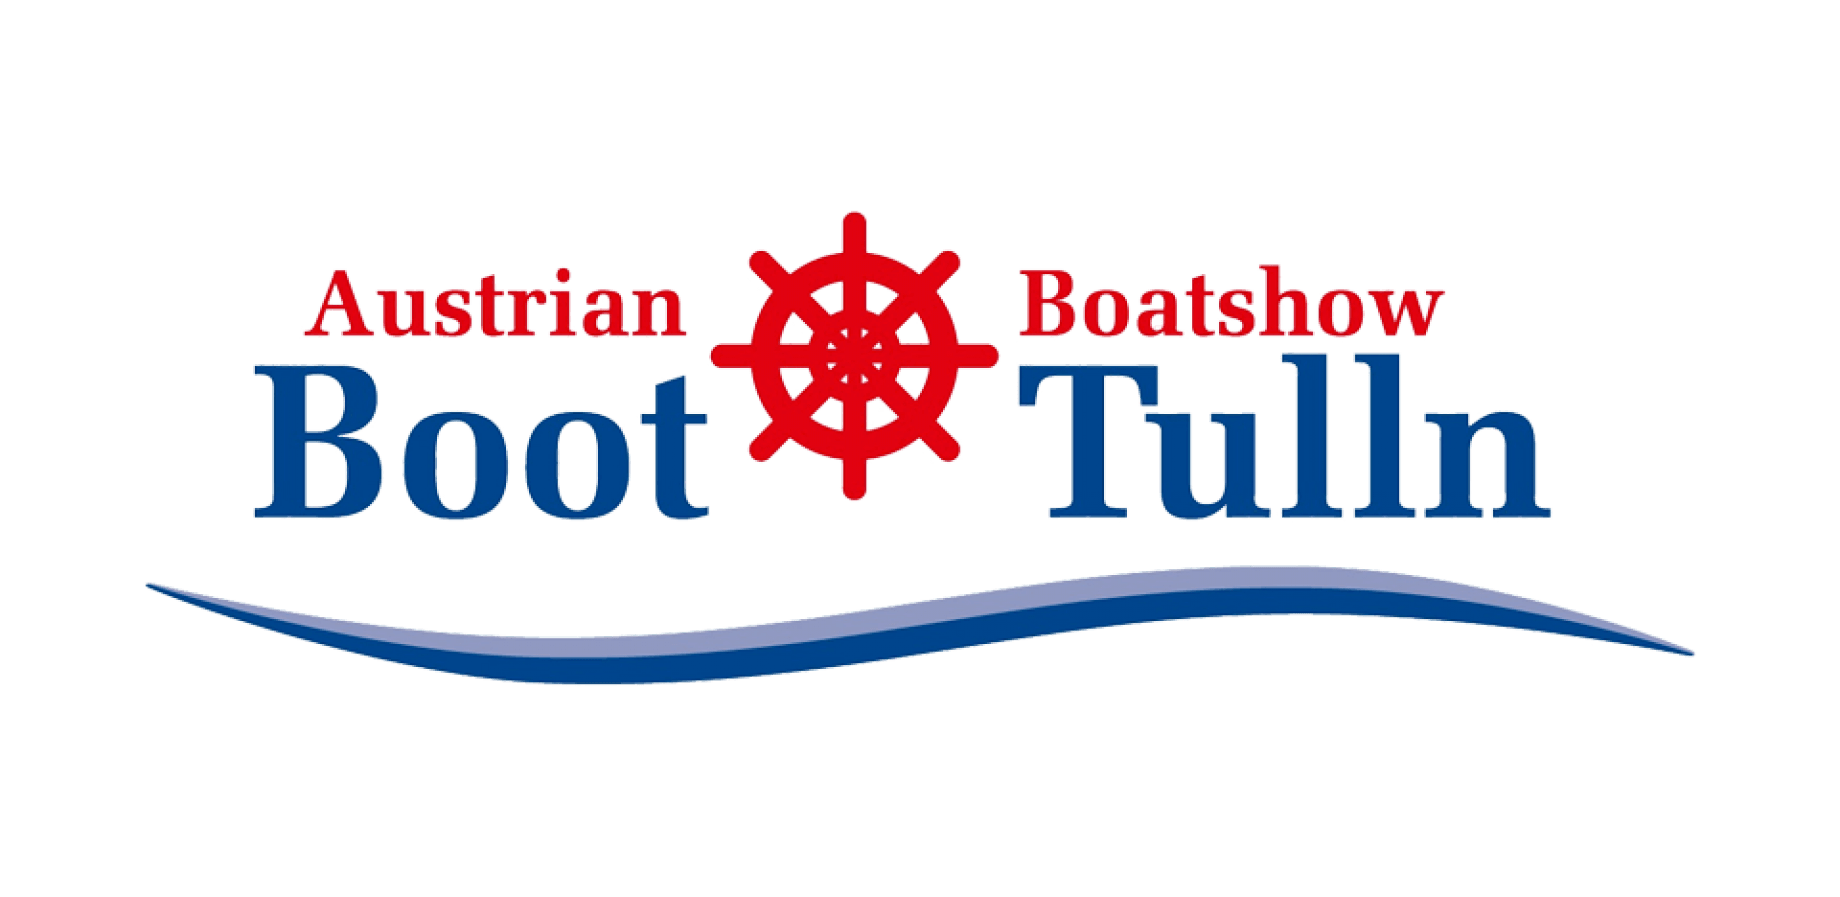 Austrian boat show logo